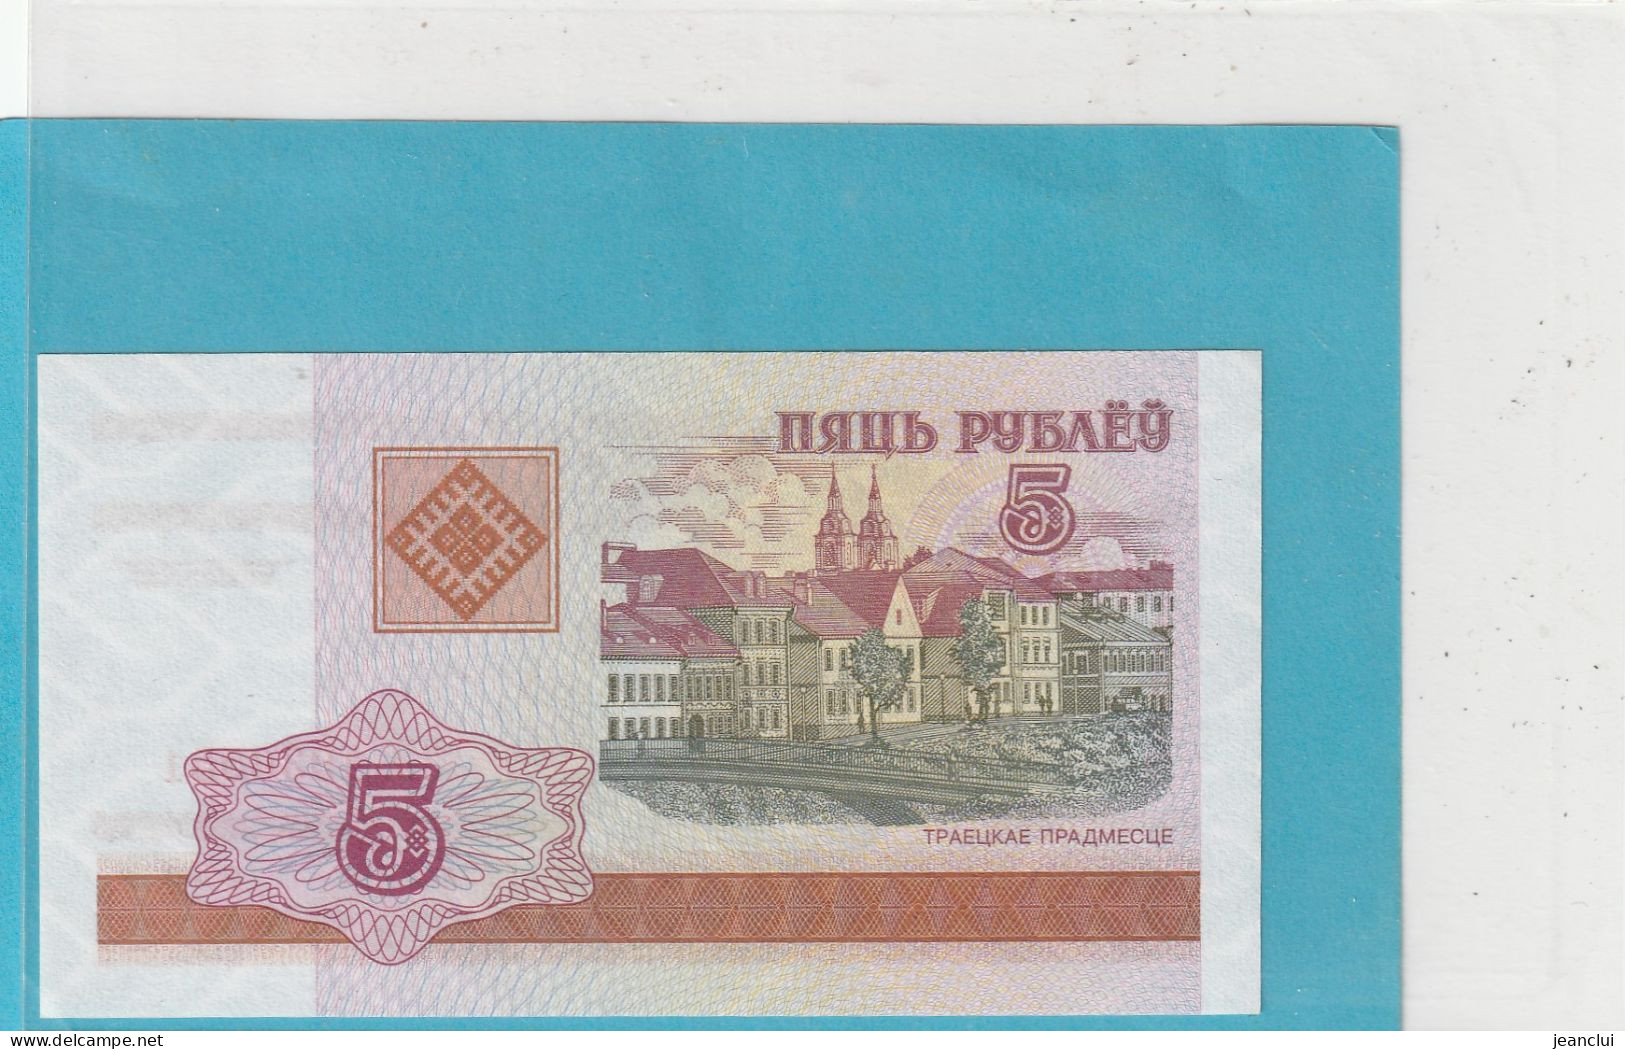 BELARUS NATIONAL BANK  .  5 RUBLEI   . N°  BB 4936551 .  2000     2 SCANNES  .  BILLET ETAT LUXE - Belarus